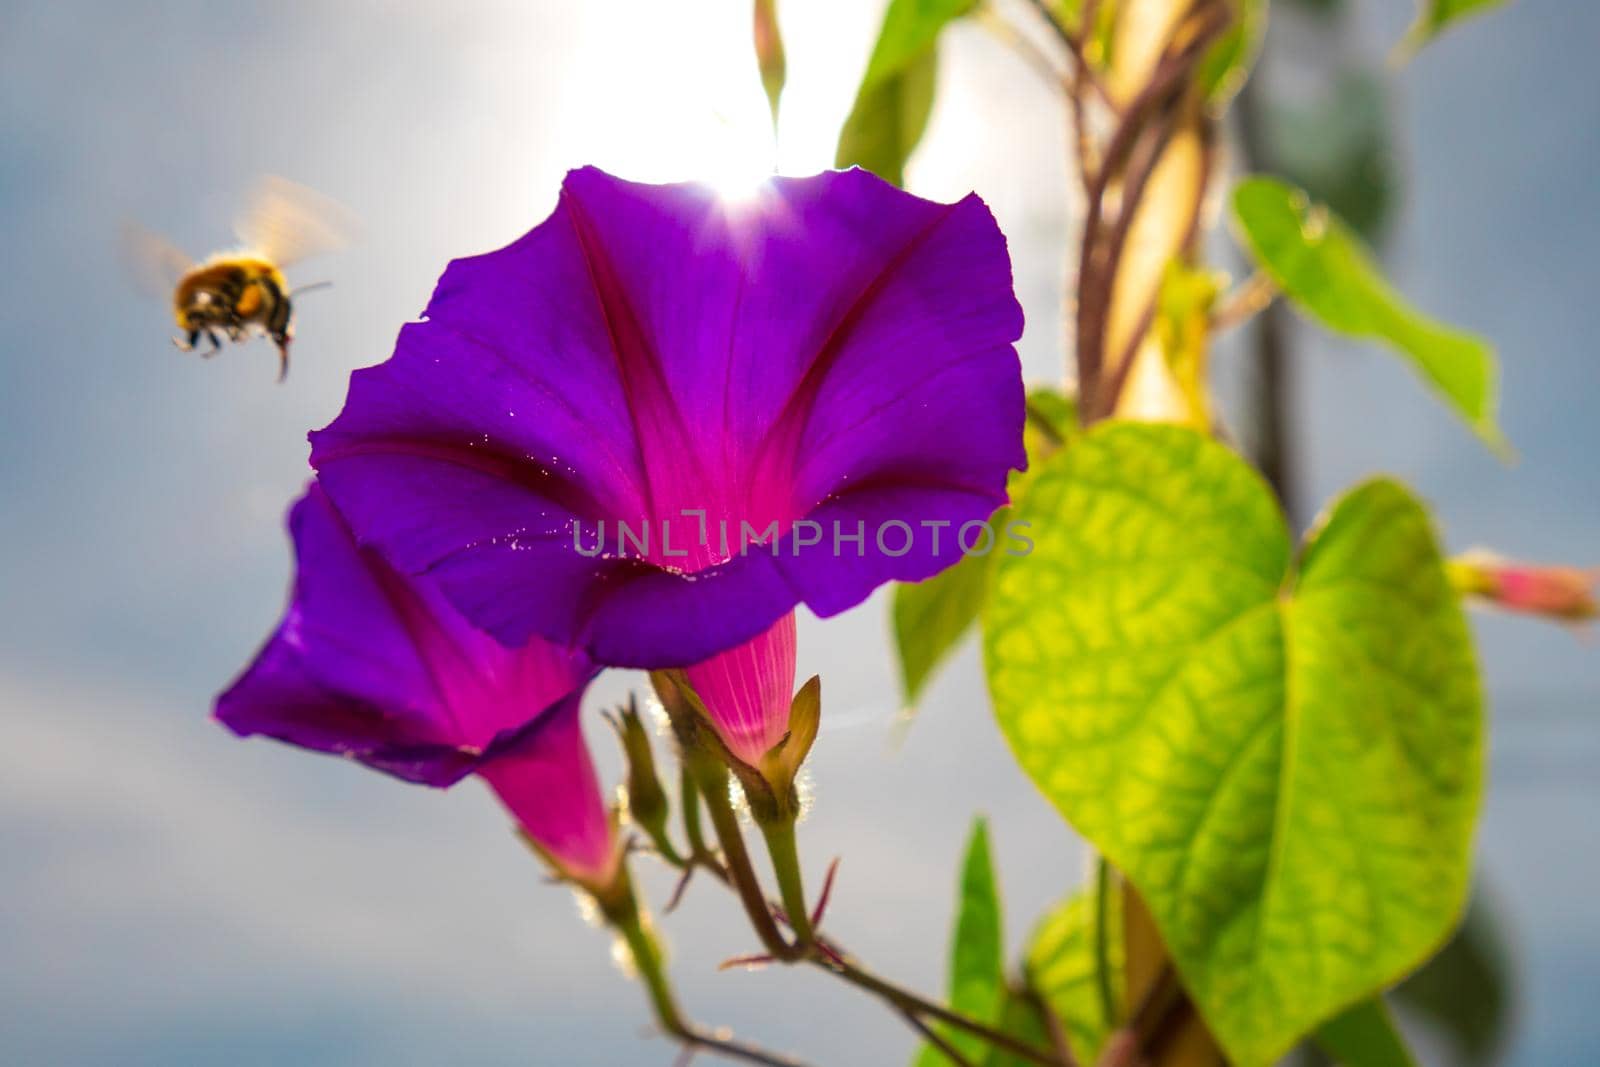 Ipomoea purpurea (Purple morning glory) flower and flying bee